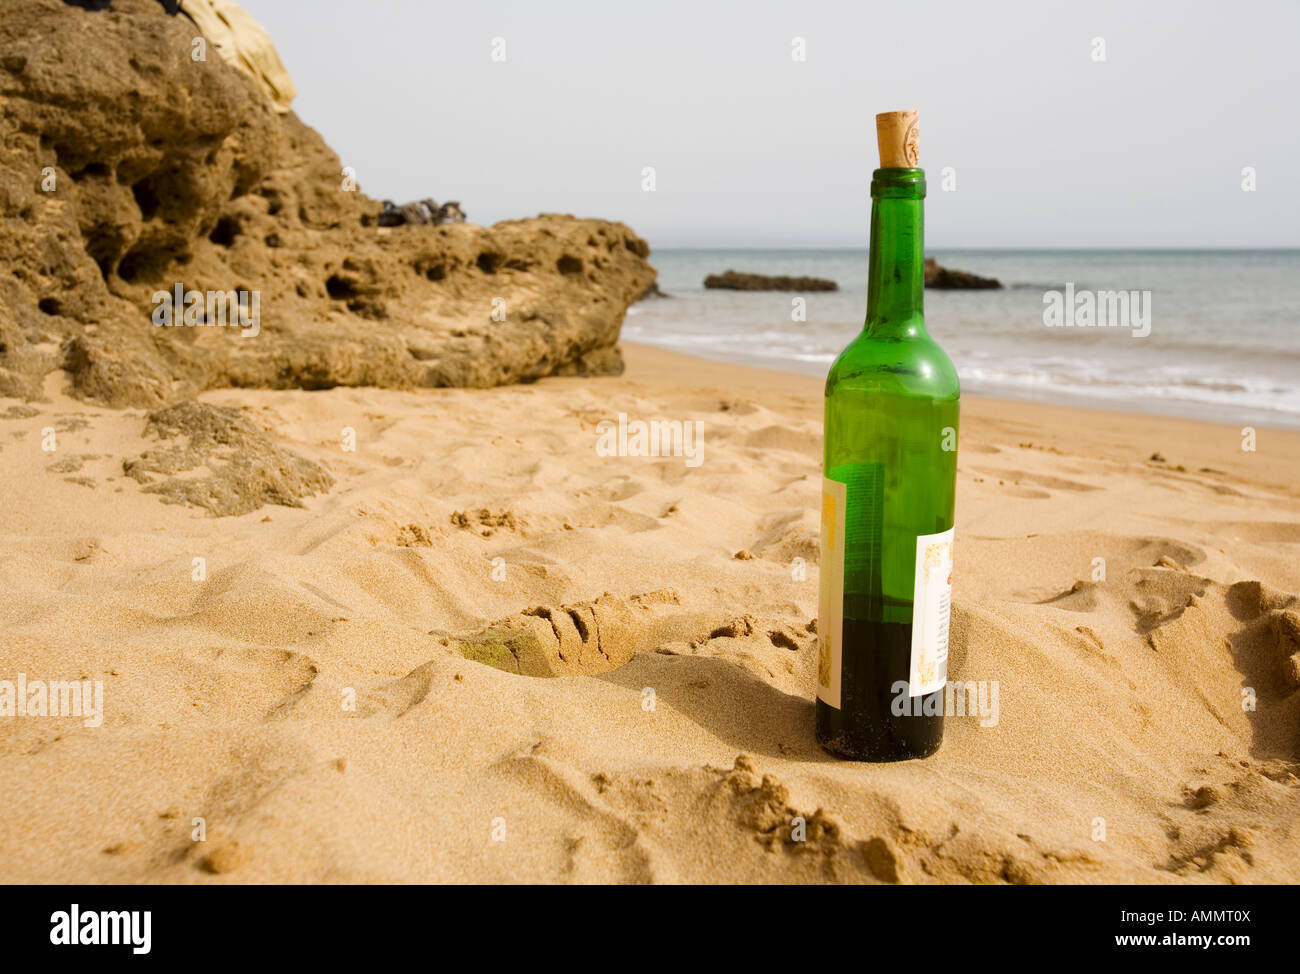 Flasche Wein am Strand Stockfotografie - Alamy